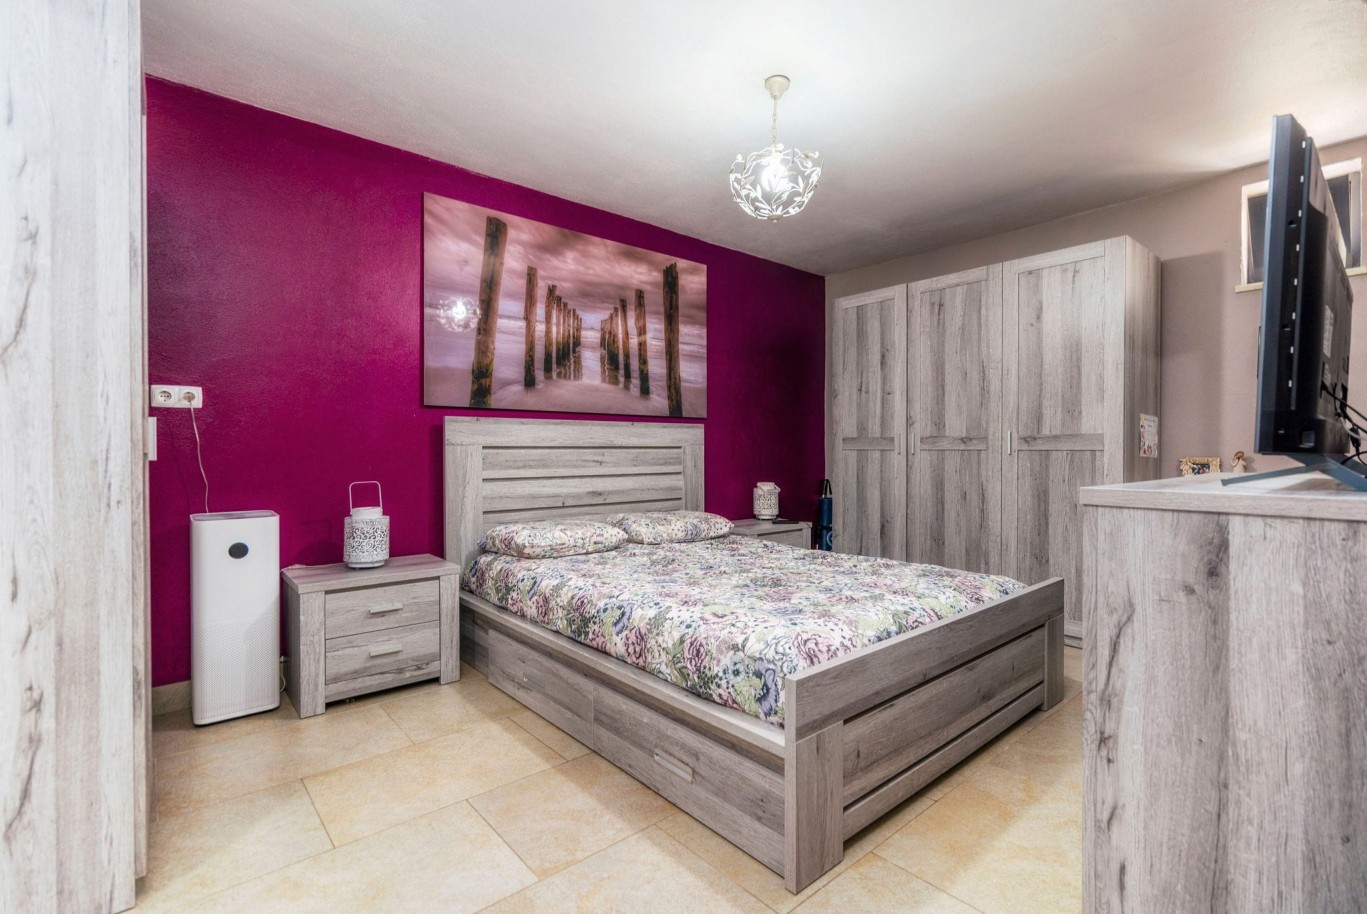 3+1 bedroom villa & 2 bedroom apartment for sale in Quarteira, Algarve_240772